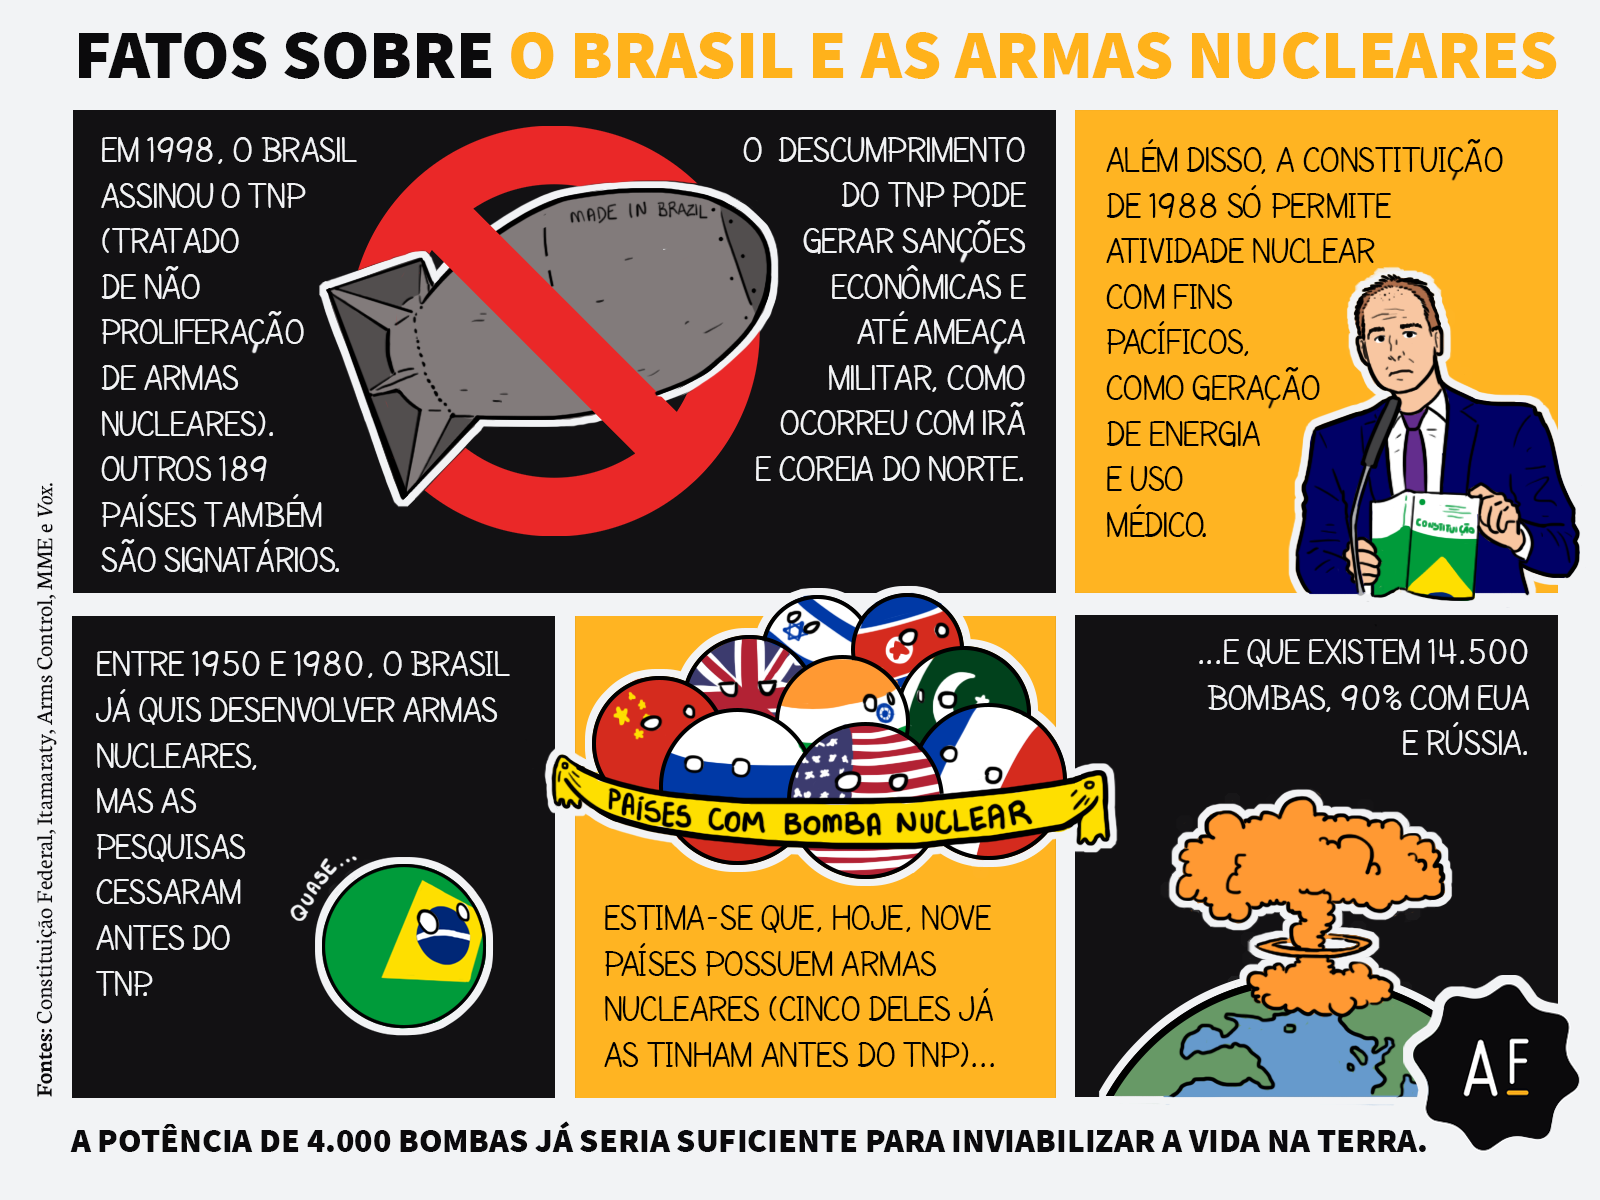 Pode cair uma bomba nuclear no Brasil?